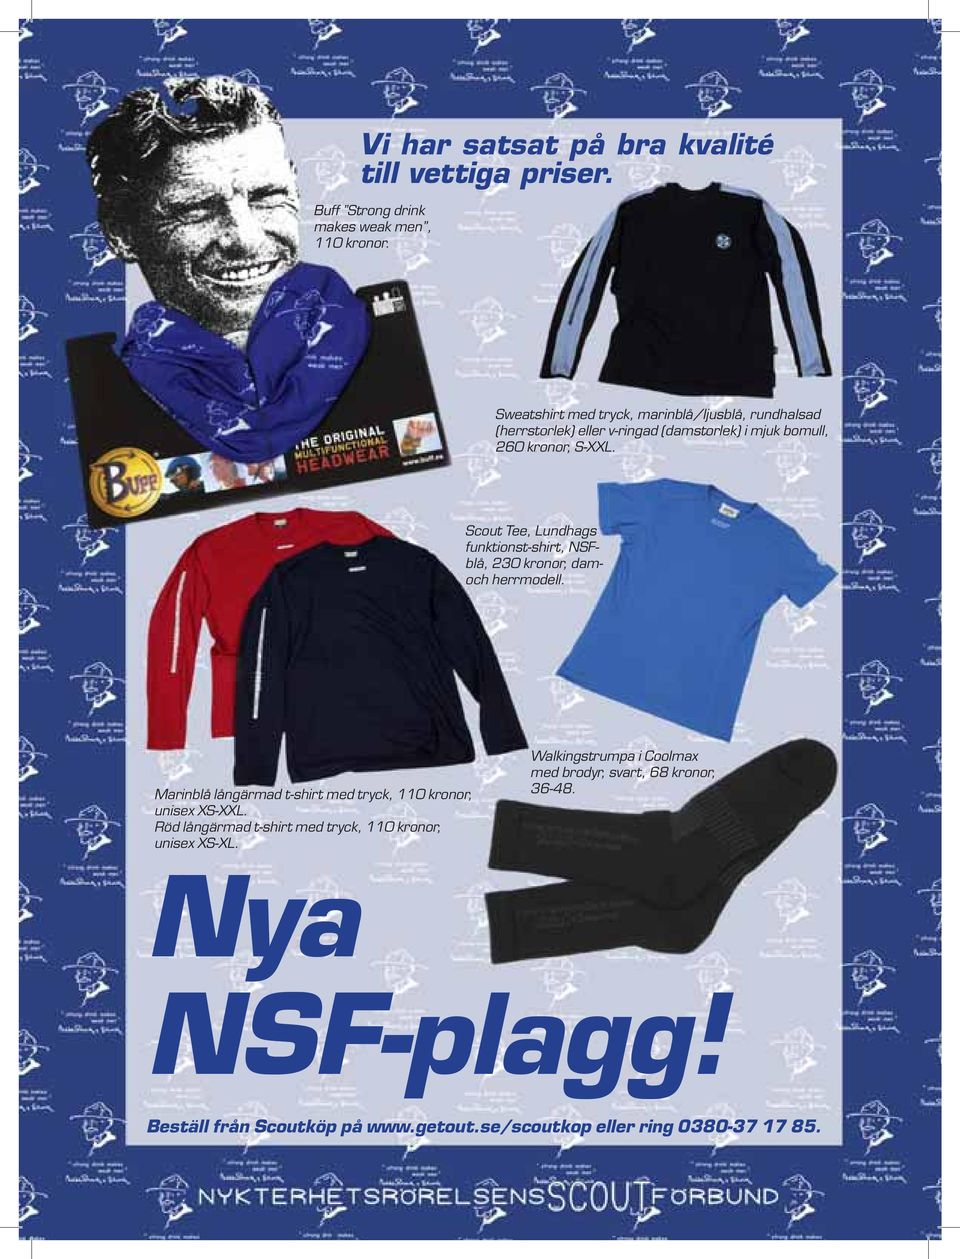 Scout Tee, Lundhags funktionst-shirt, NSFblå, 230 kronor, damoch herrmodell. Marinblå långärmad t-shirt med tryck, 110 kronor, unisex XS-XXL.